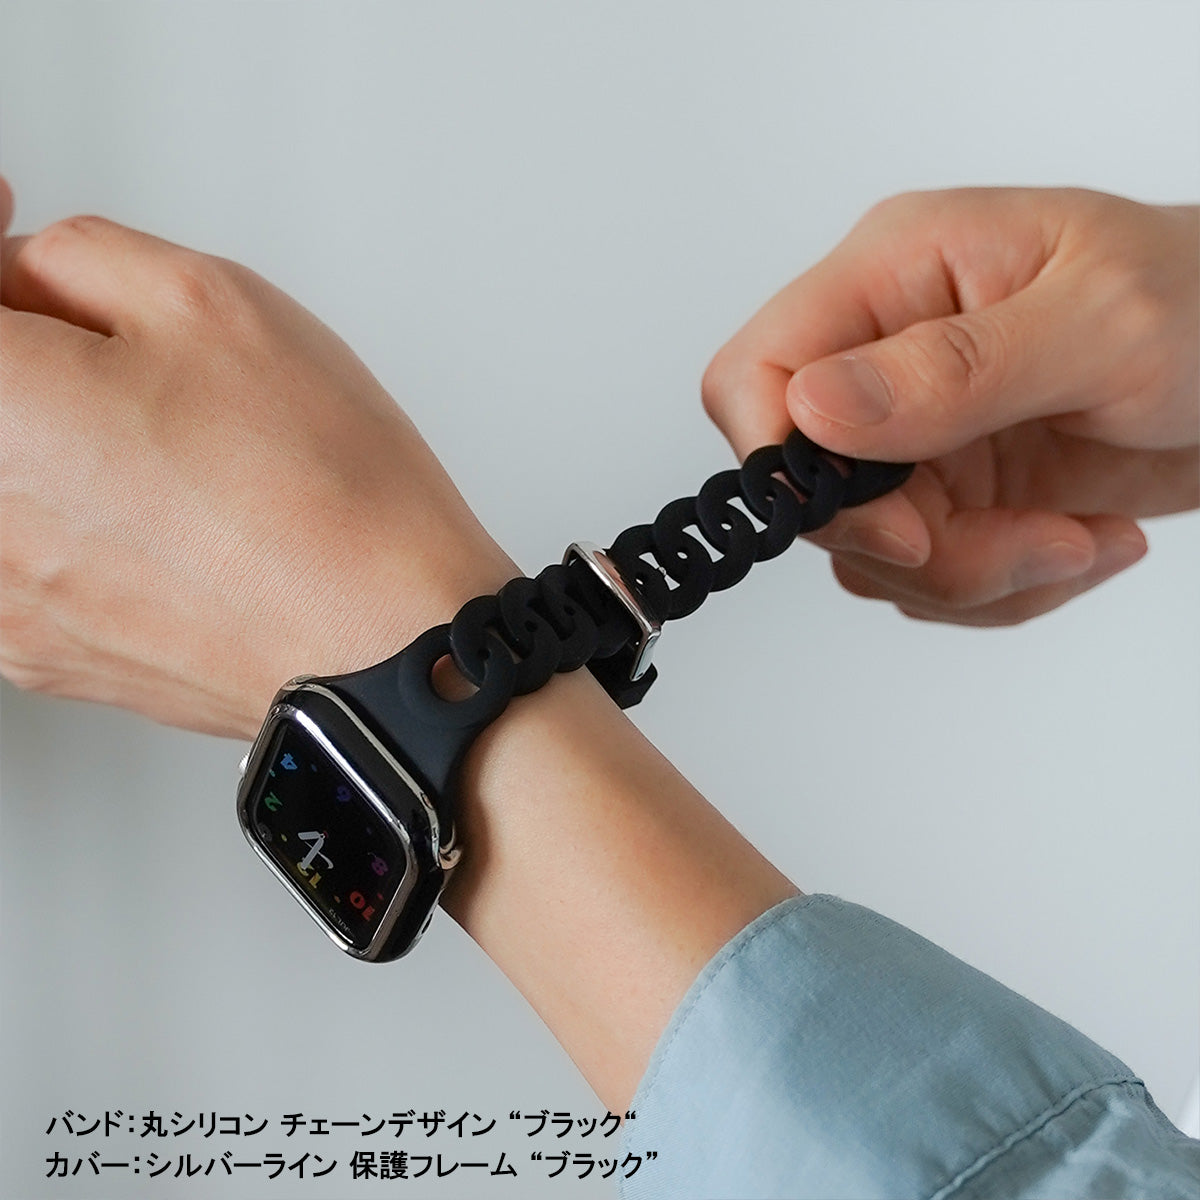 Round silicone chain design Apple watch band Apple Watch